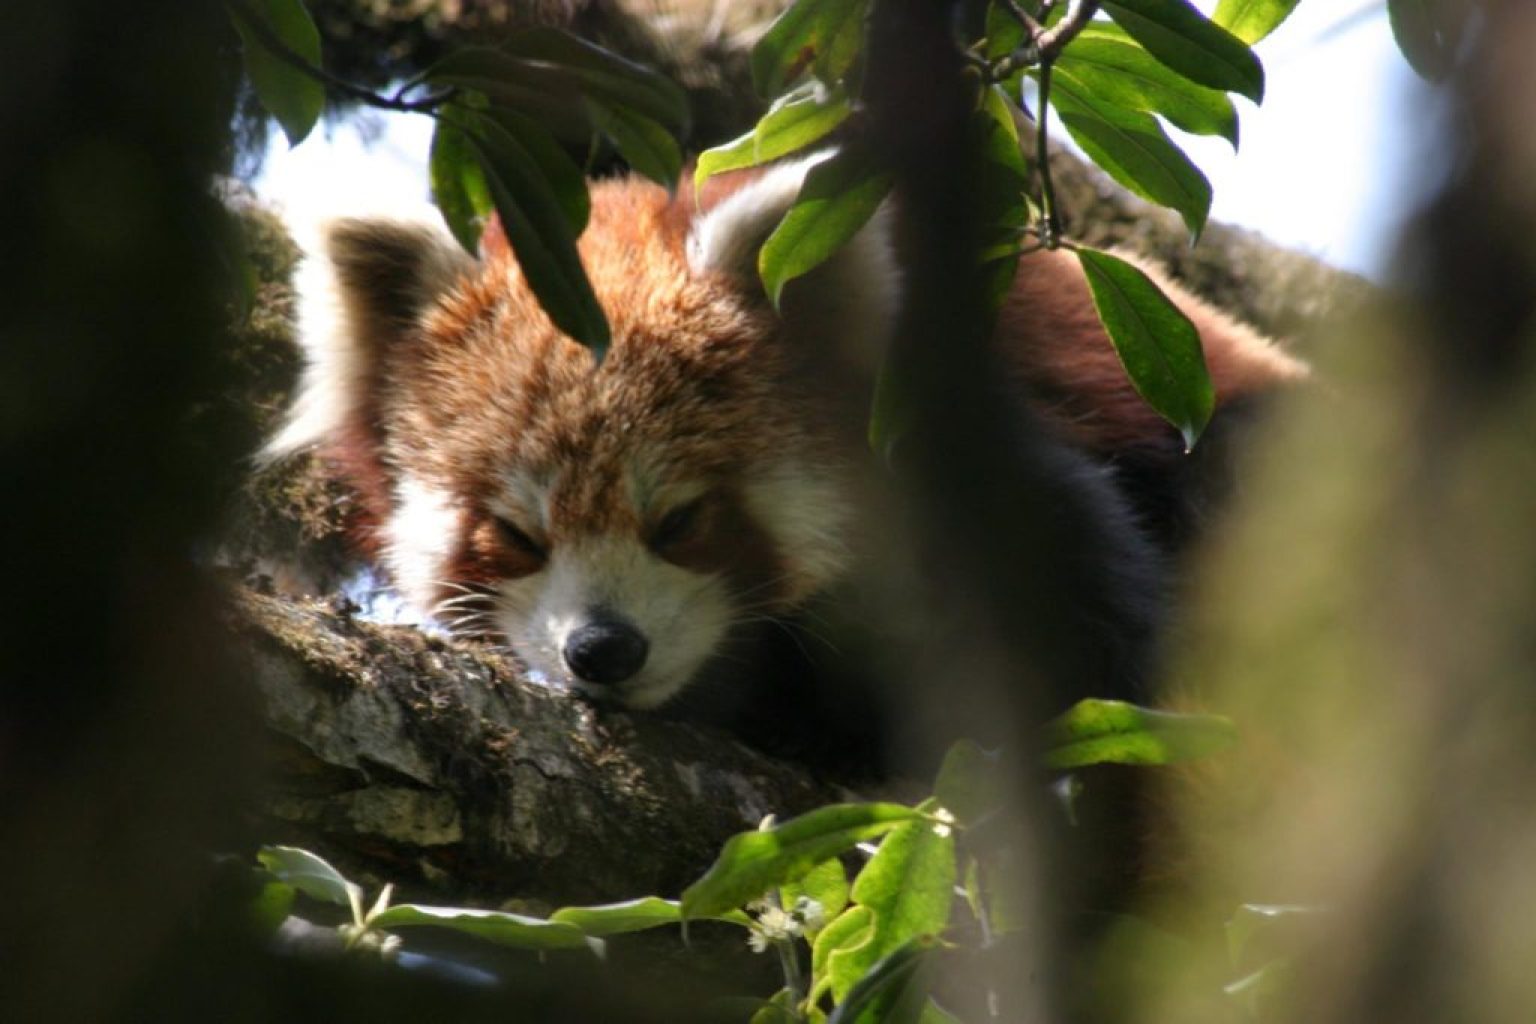 Red Panda in tree